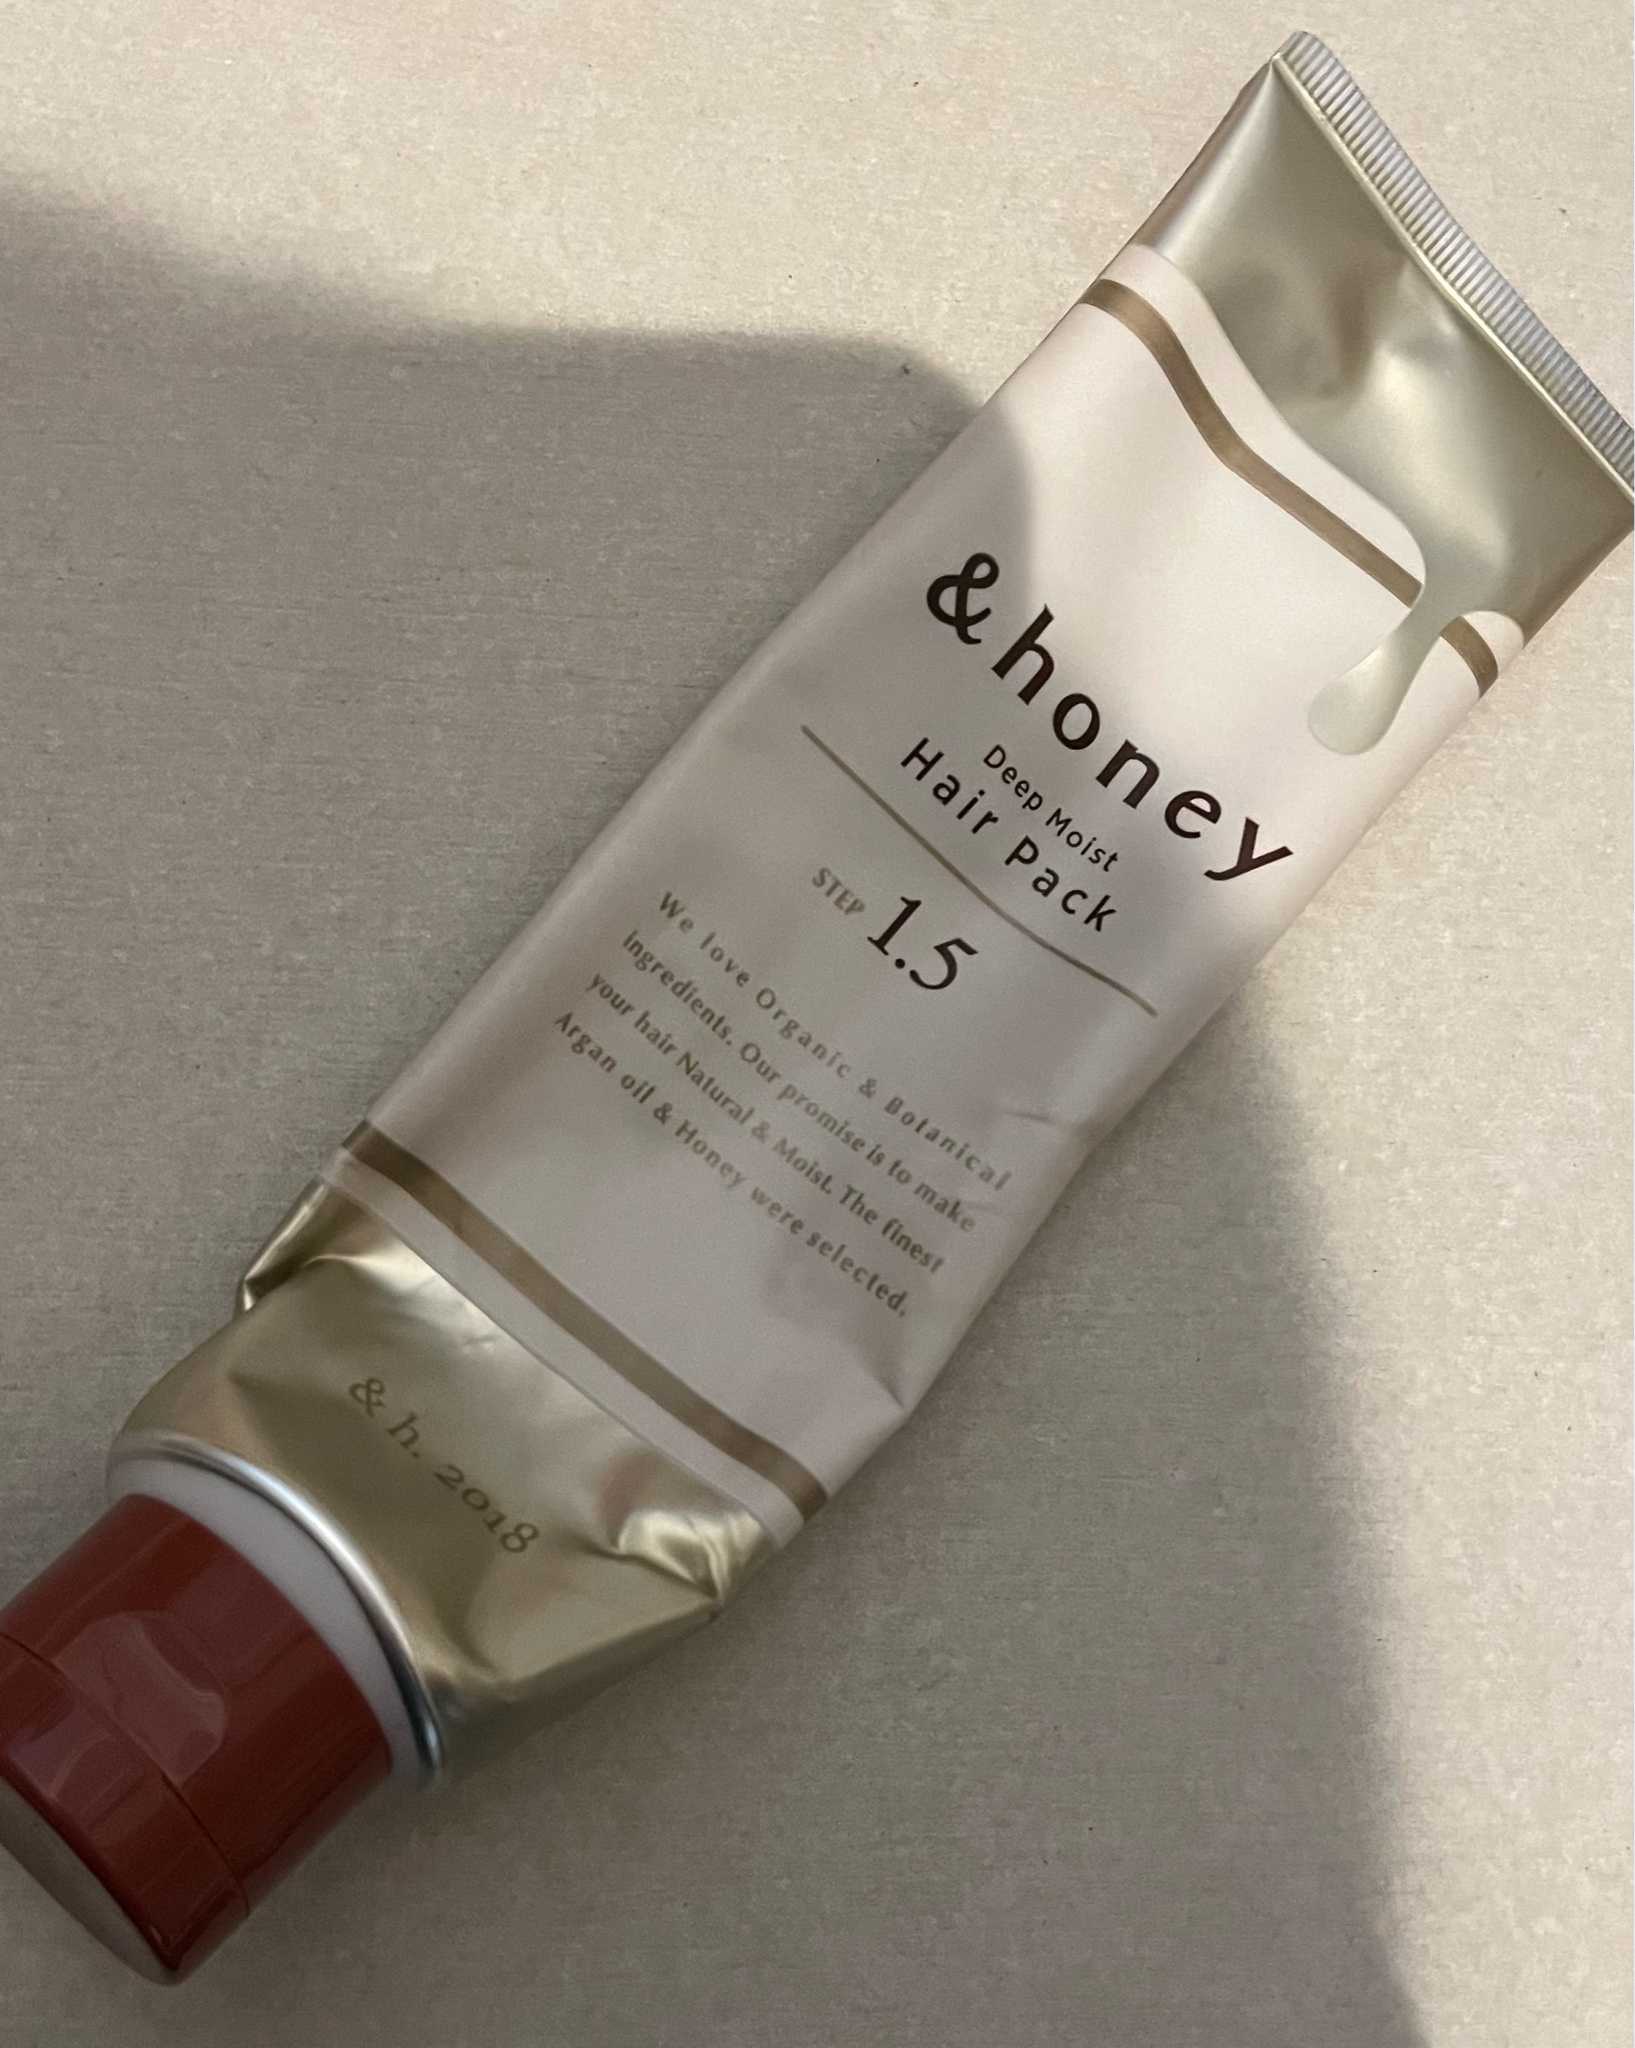 &honey（アンドハニー） / ディープモイスト ヘアパック1.5の公式商品